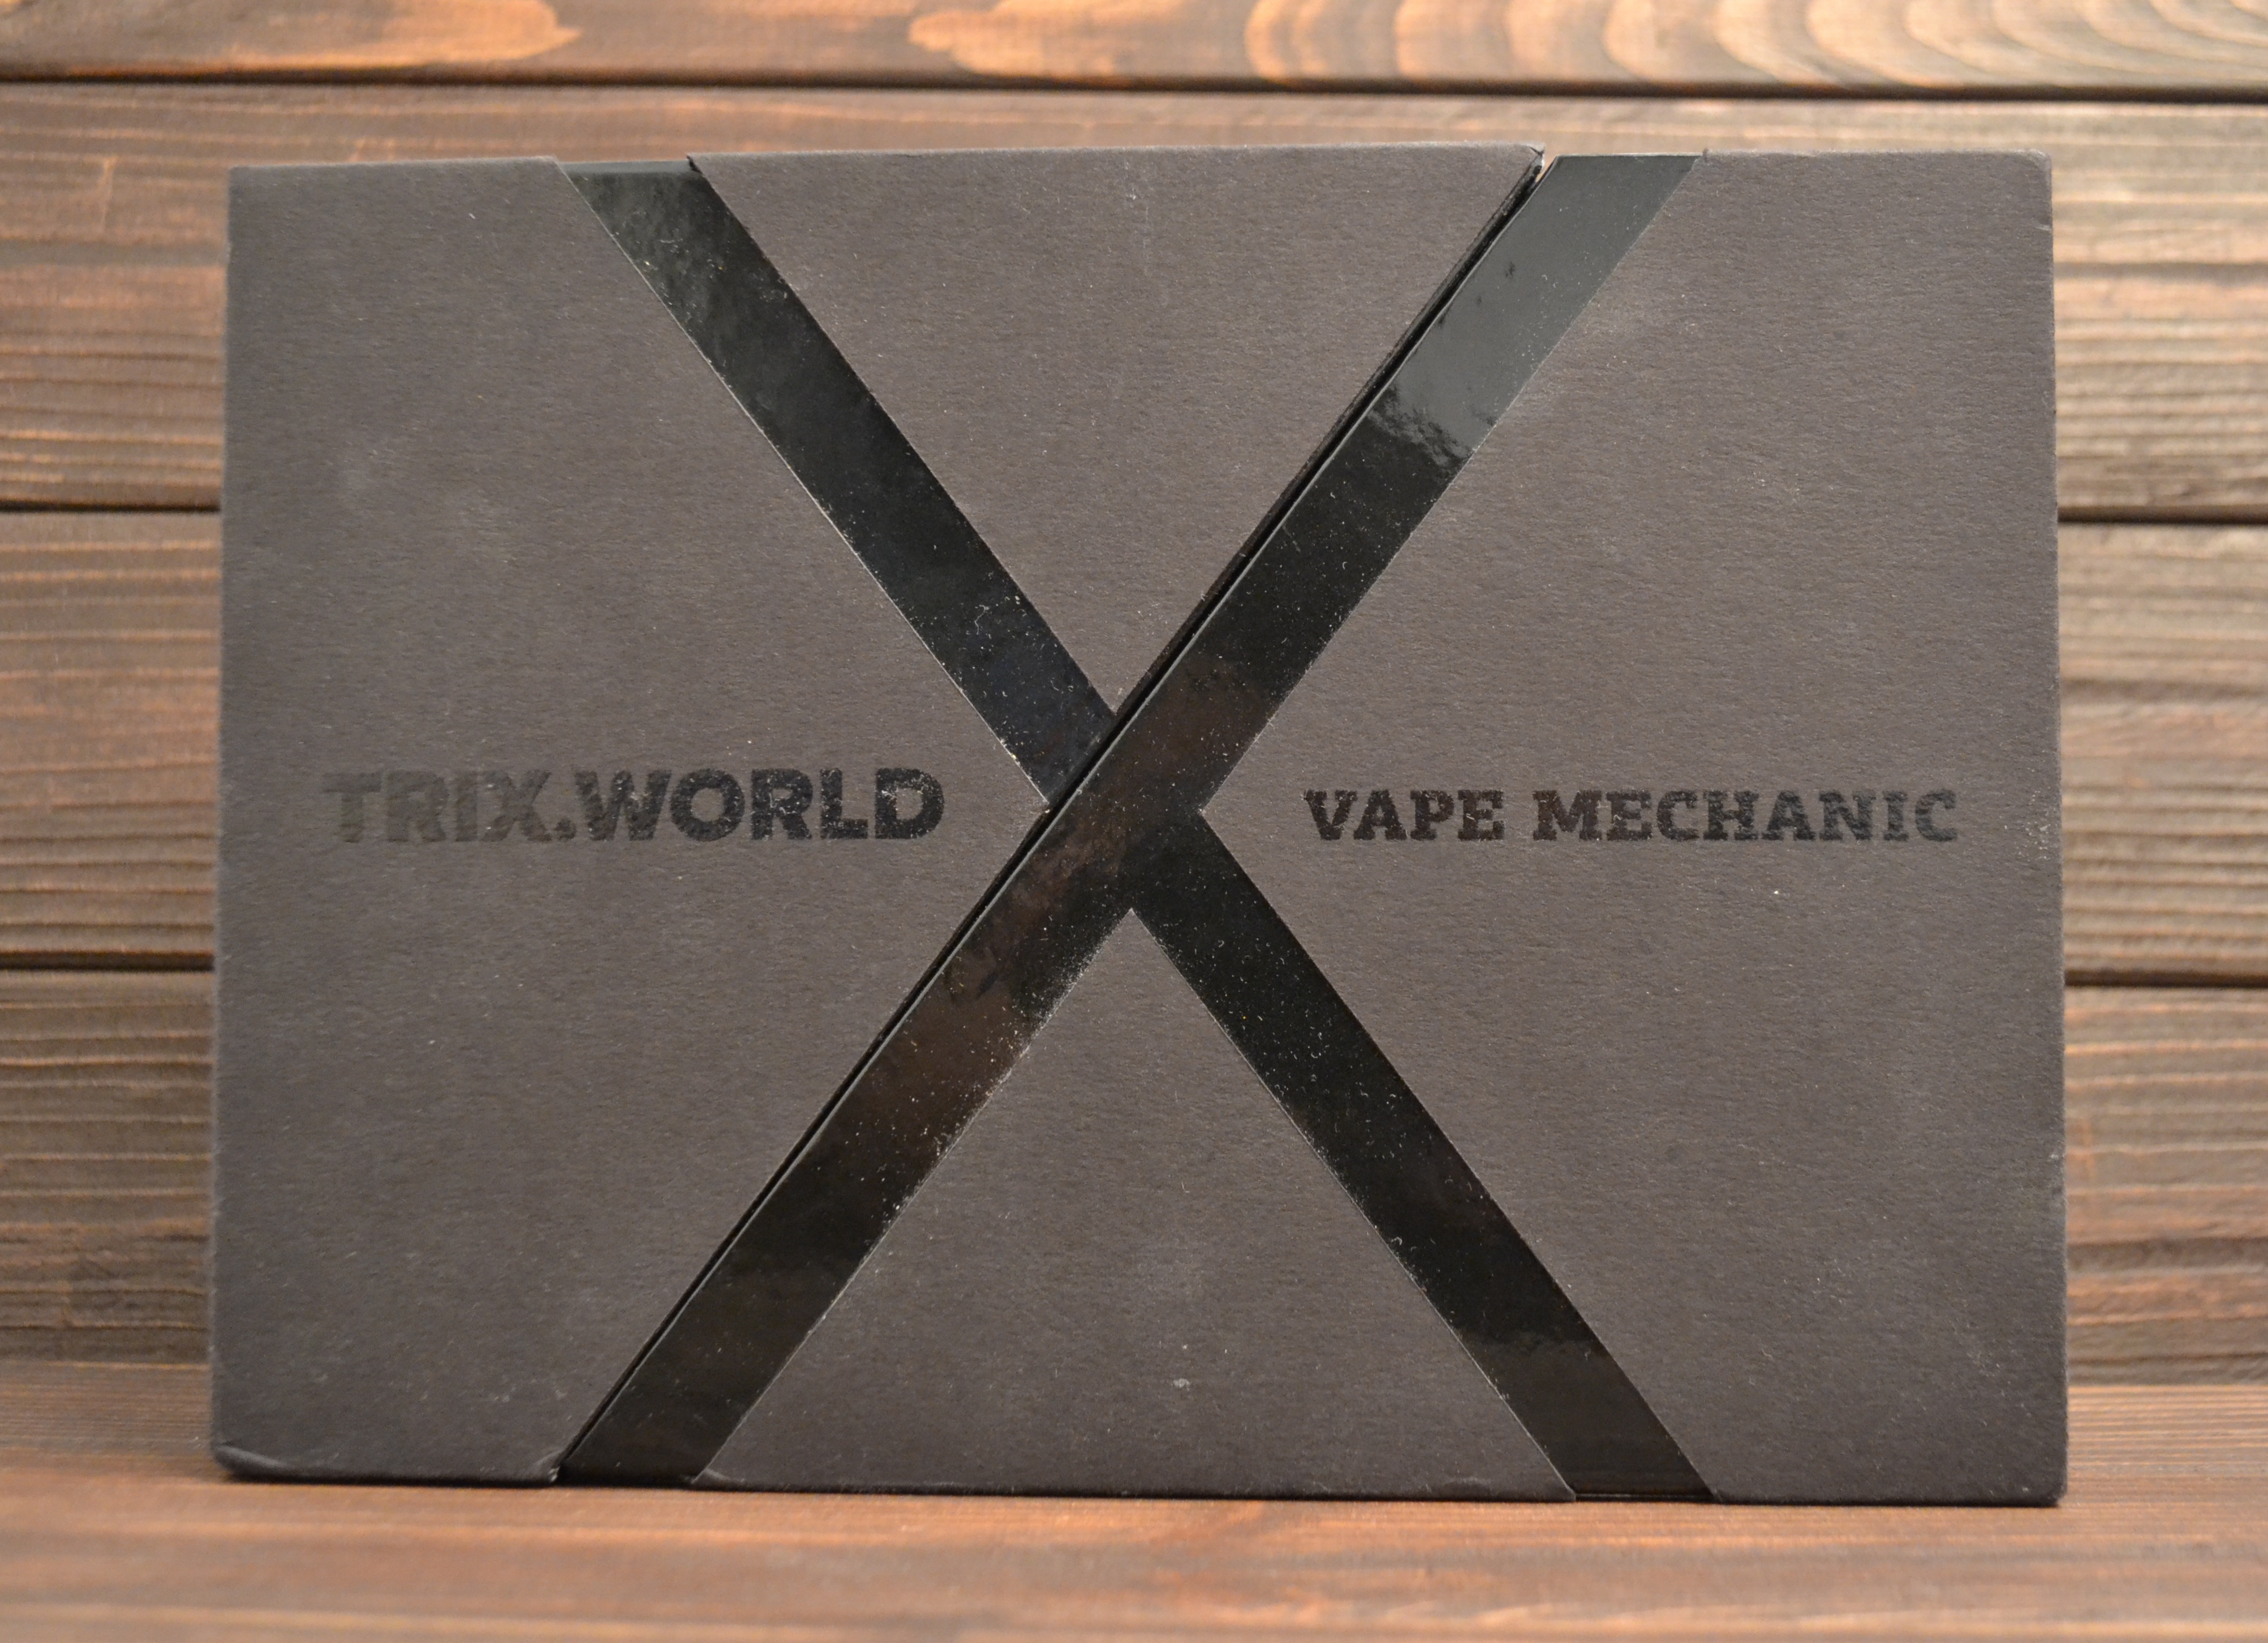 TRIX MODBOX by Smoke Kitchen & Vape Mechanics - твой заказ Деду Морозу